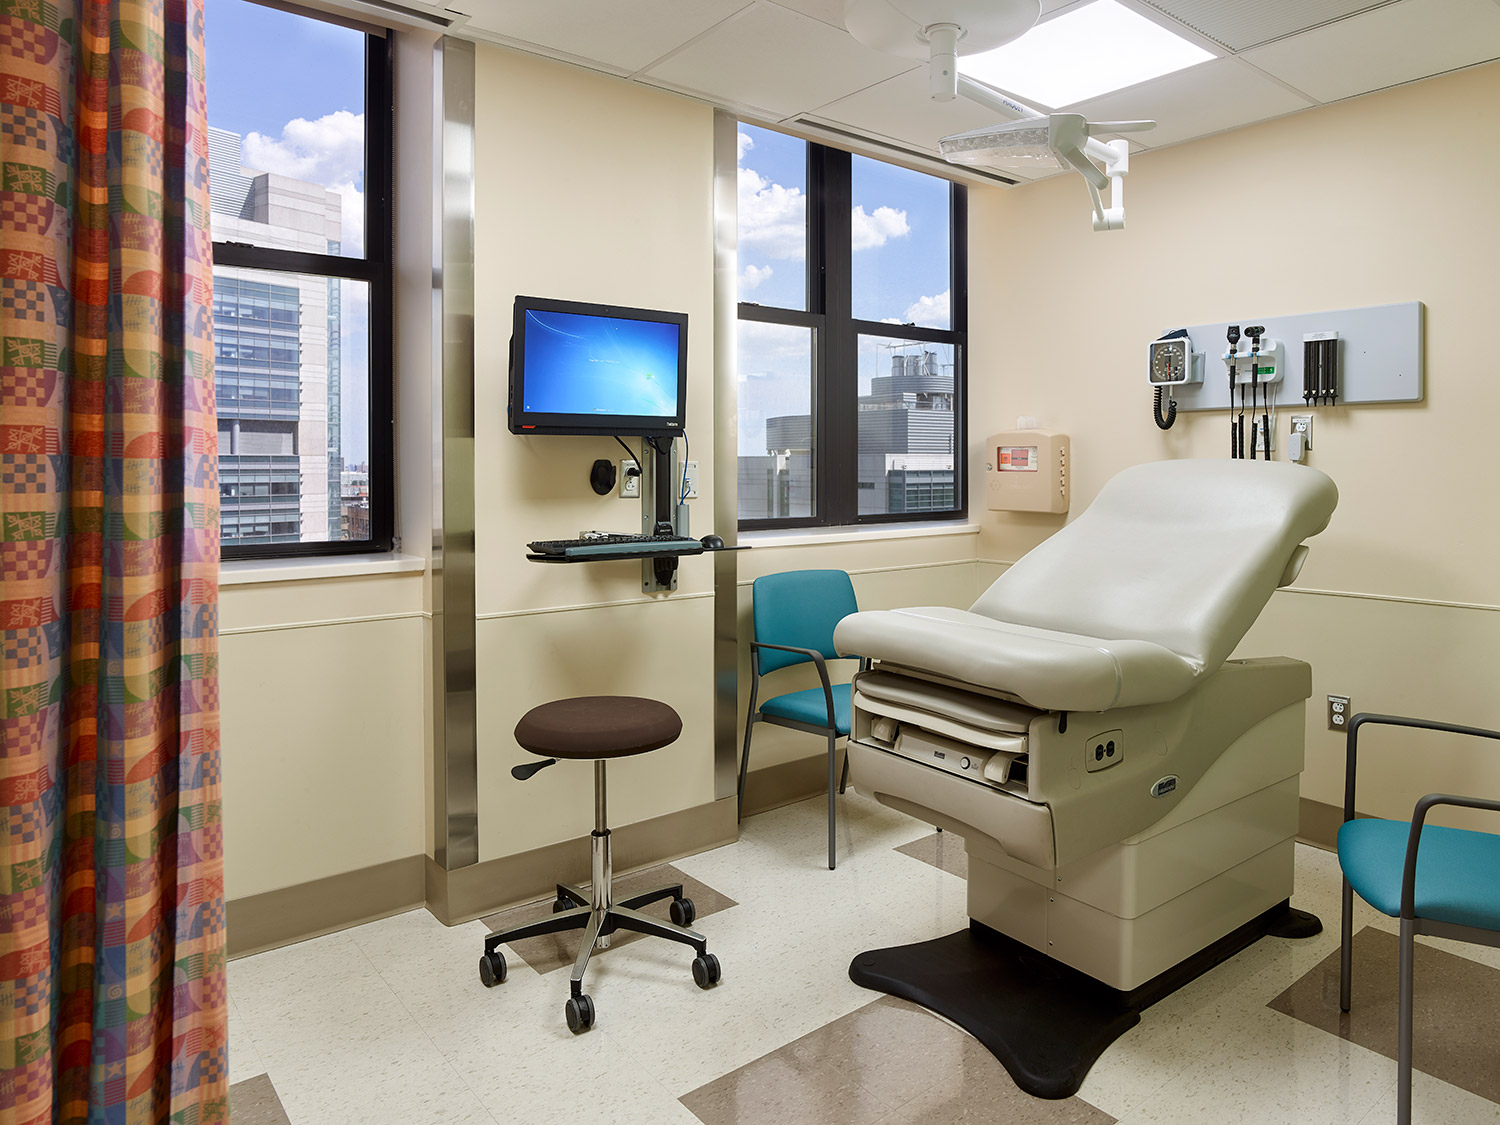 Digestive Health exam room at New York-Presbyterian's Morgan Stanley Children's Hospital in New York, NY. Architect: Array. Photo: Jeffrey Totaro.